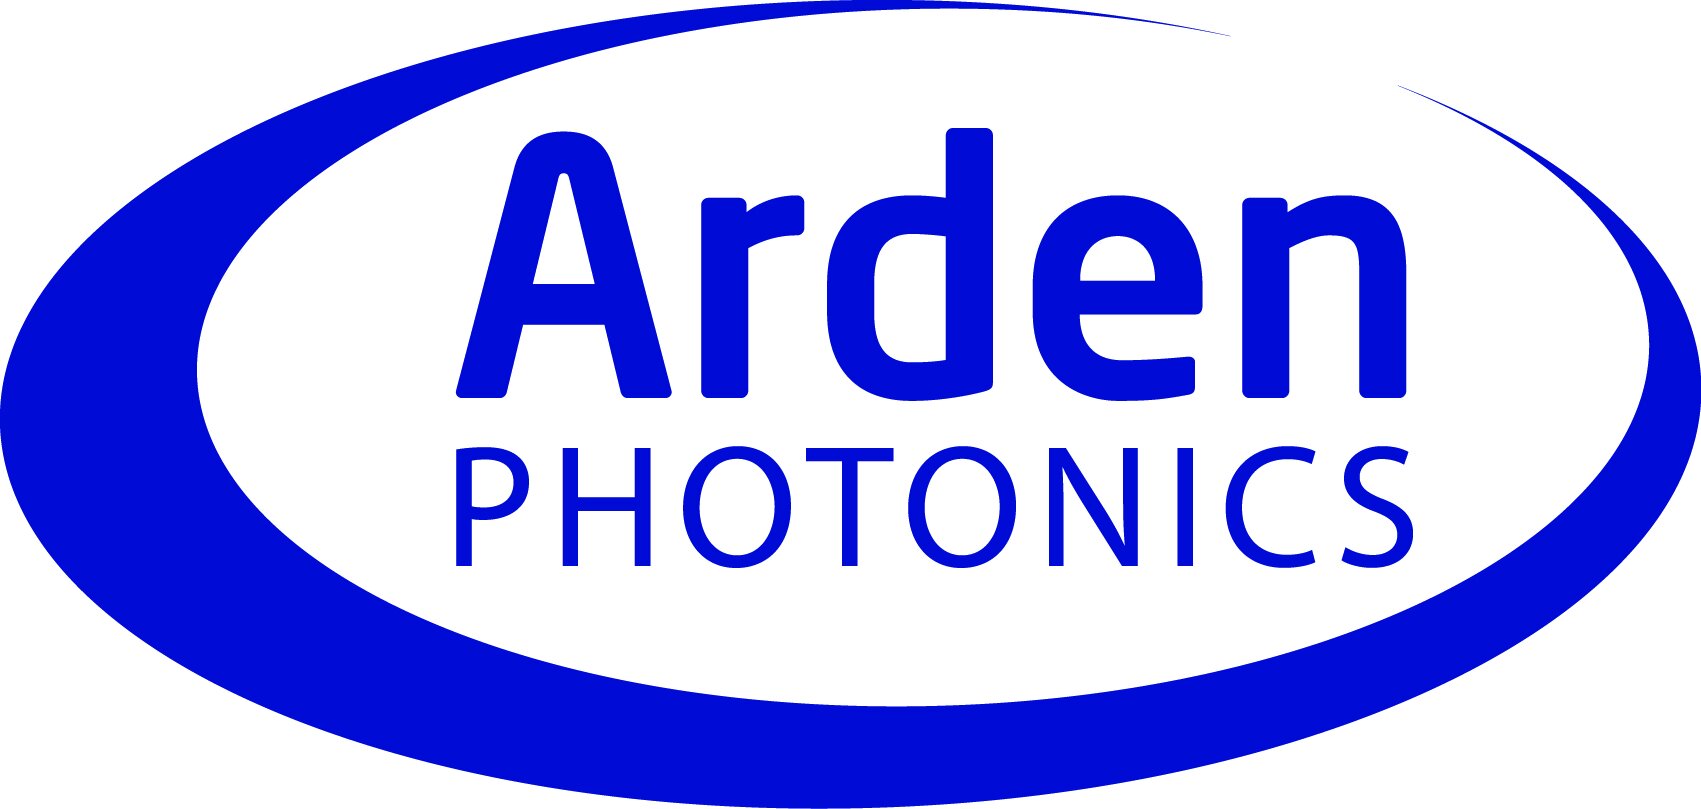 Arden Photonics